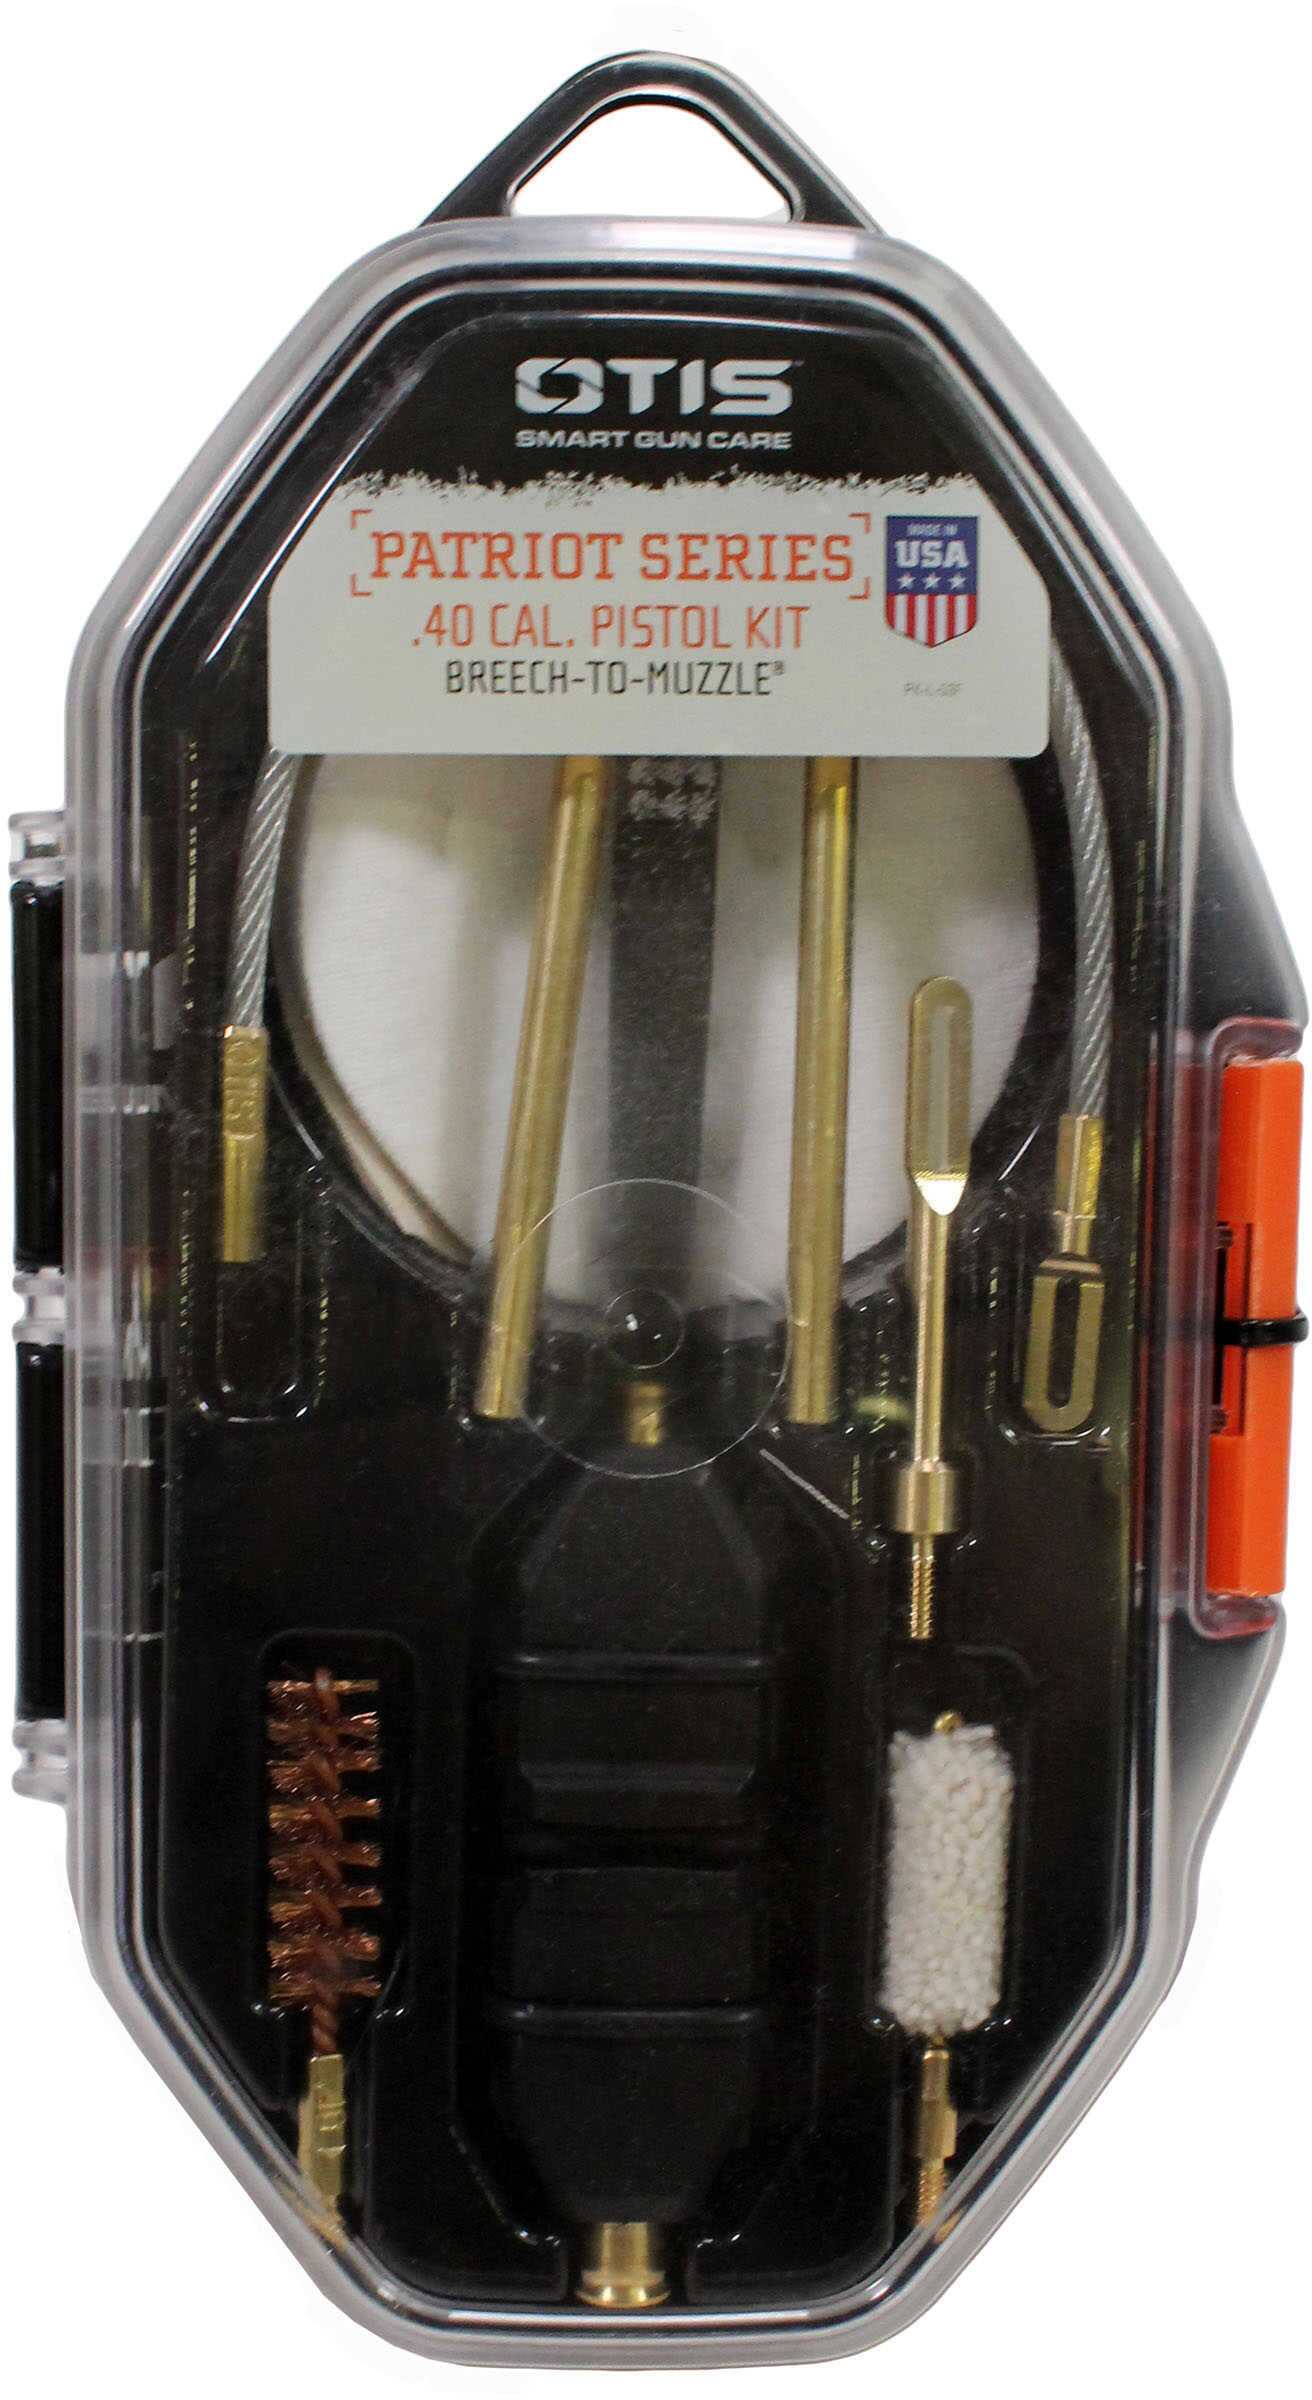 Otis Patriot Series Pistol Cleaning Kit .40 cal.